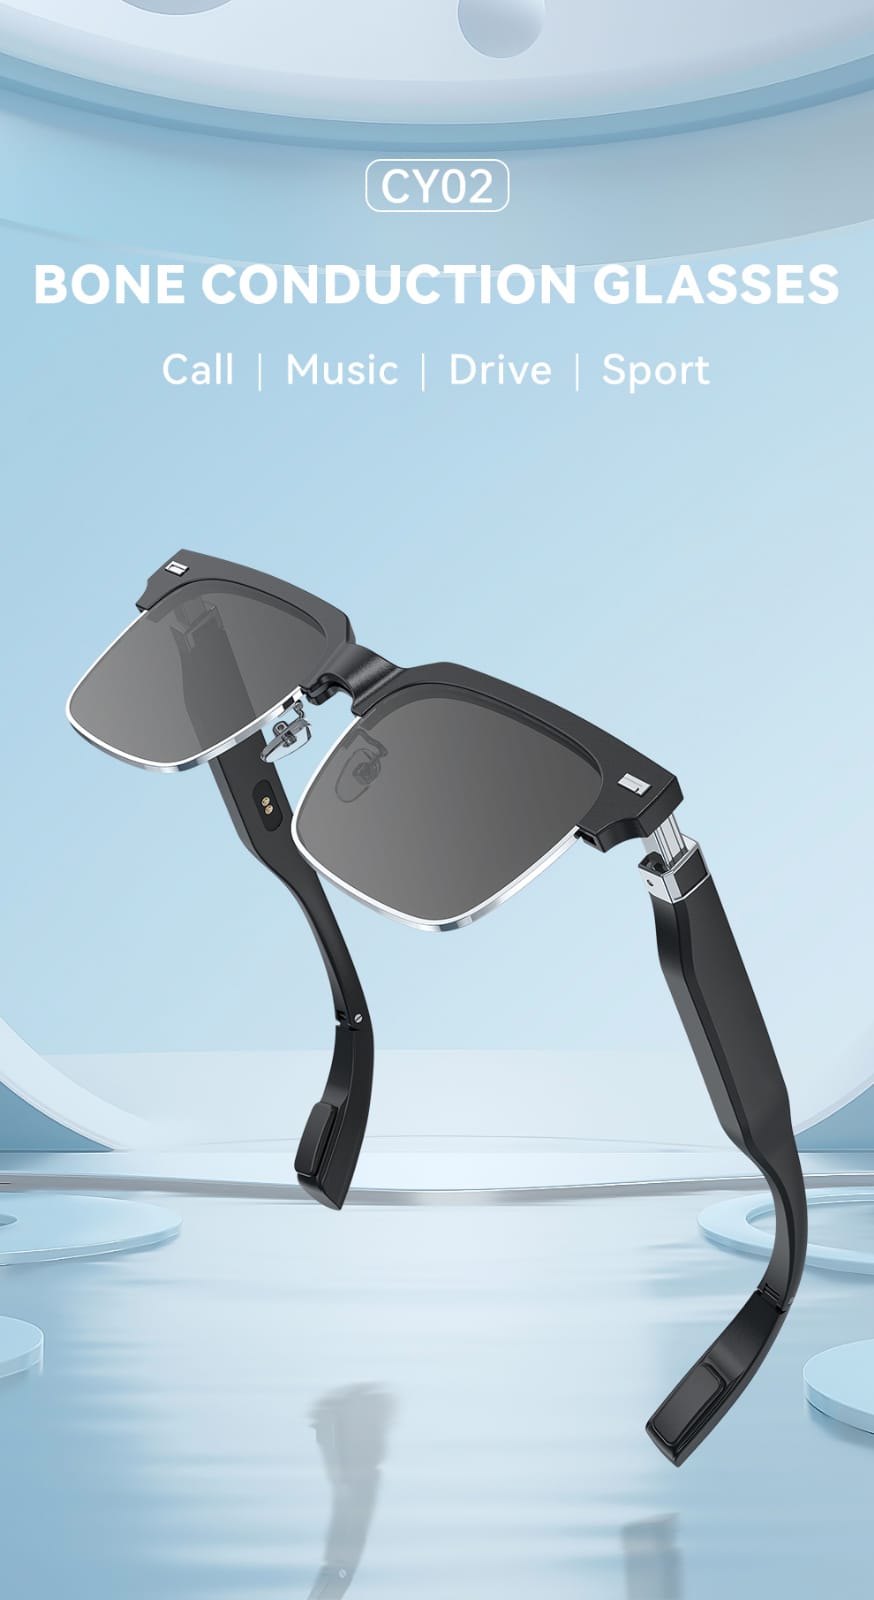 Waterproof Smart Bone conduction glasses